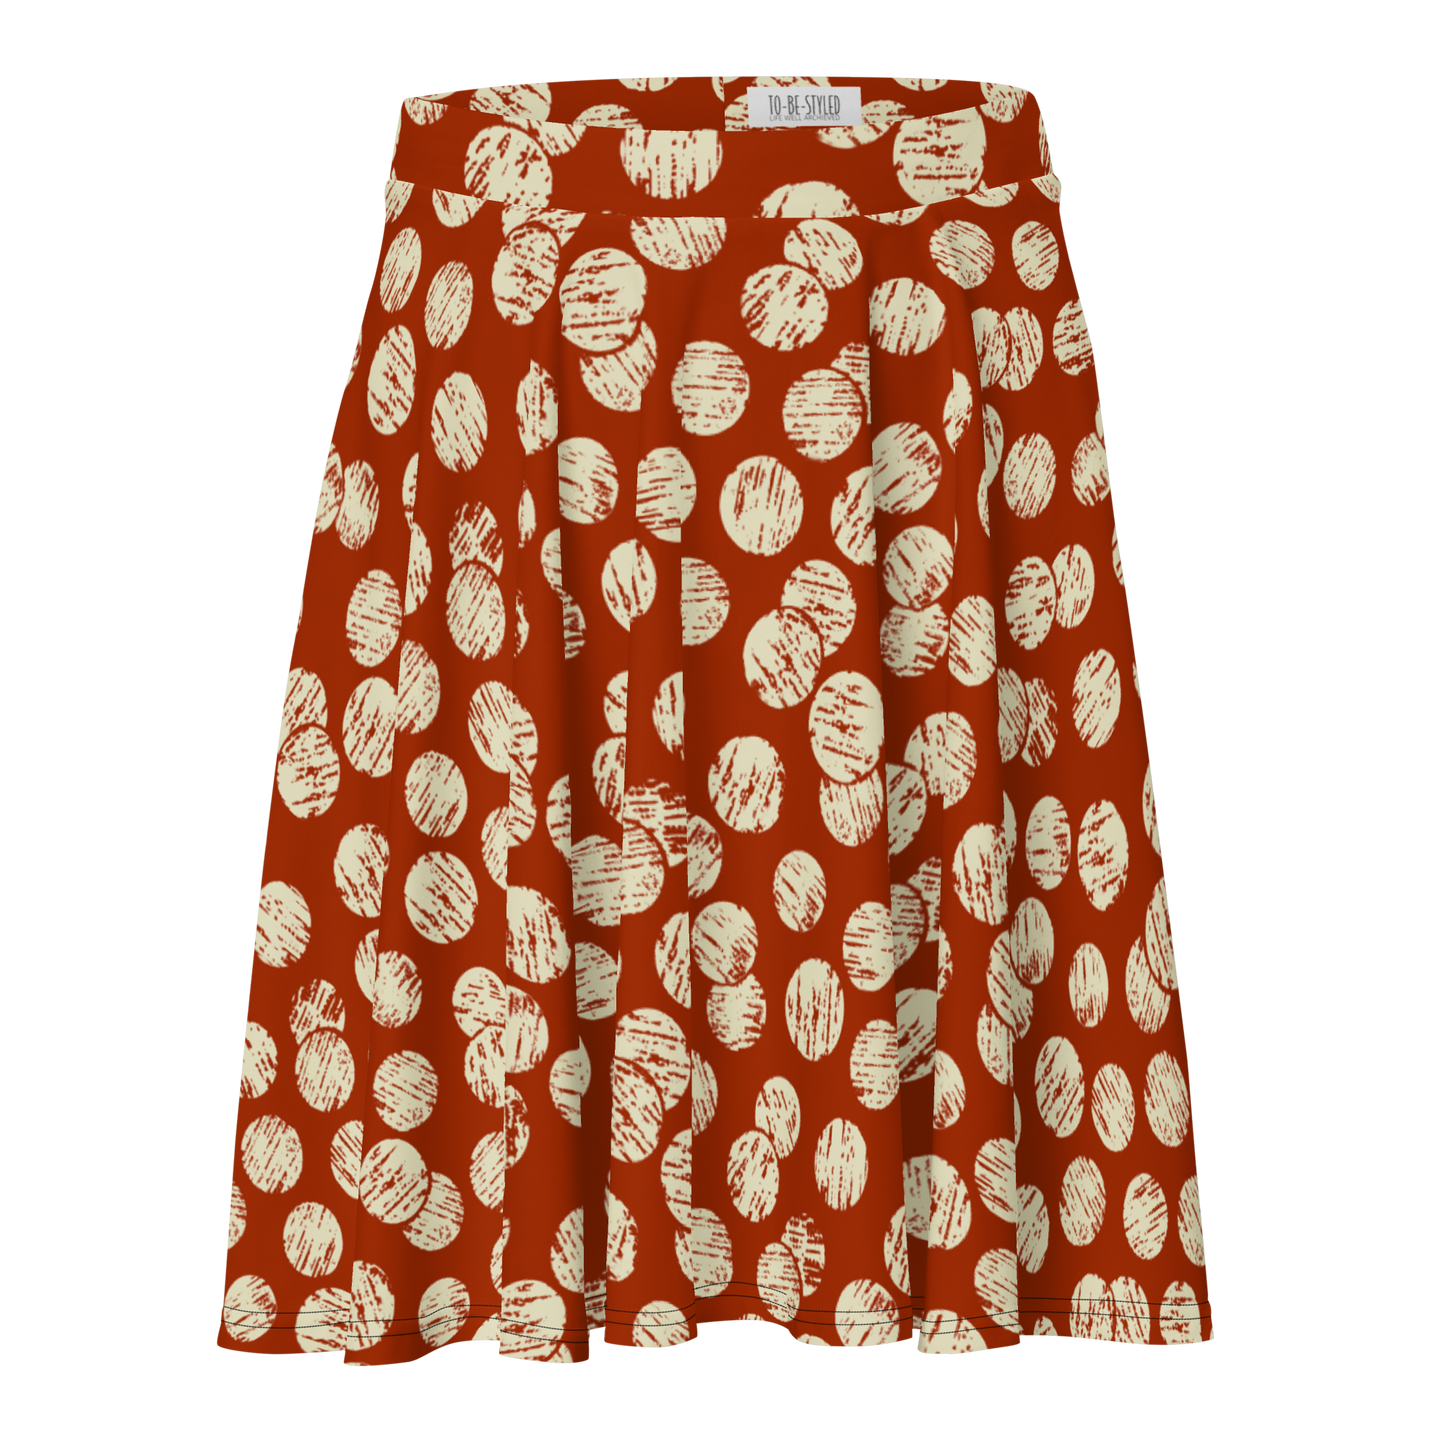 Vintage Dots Red Skater Skirt